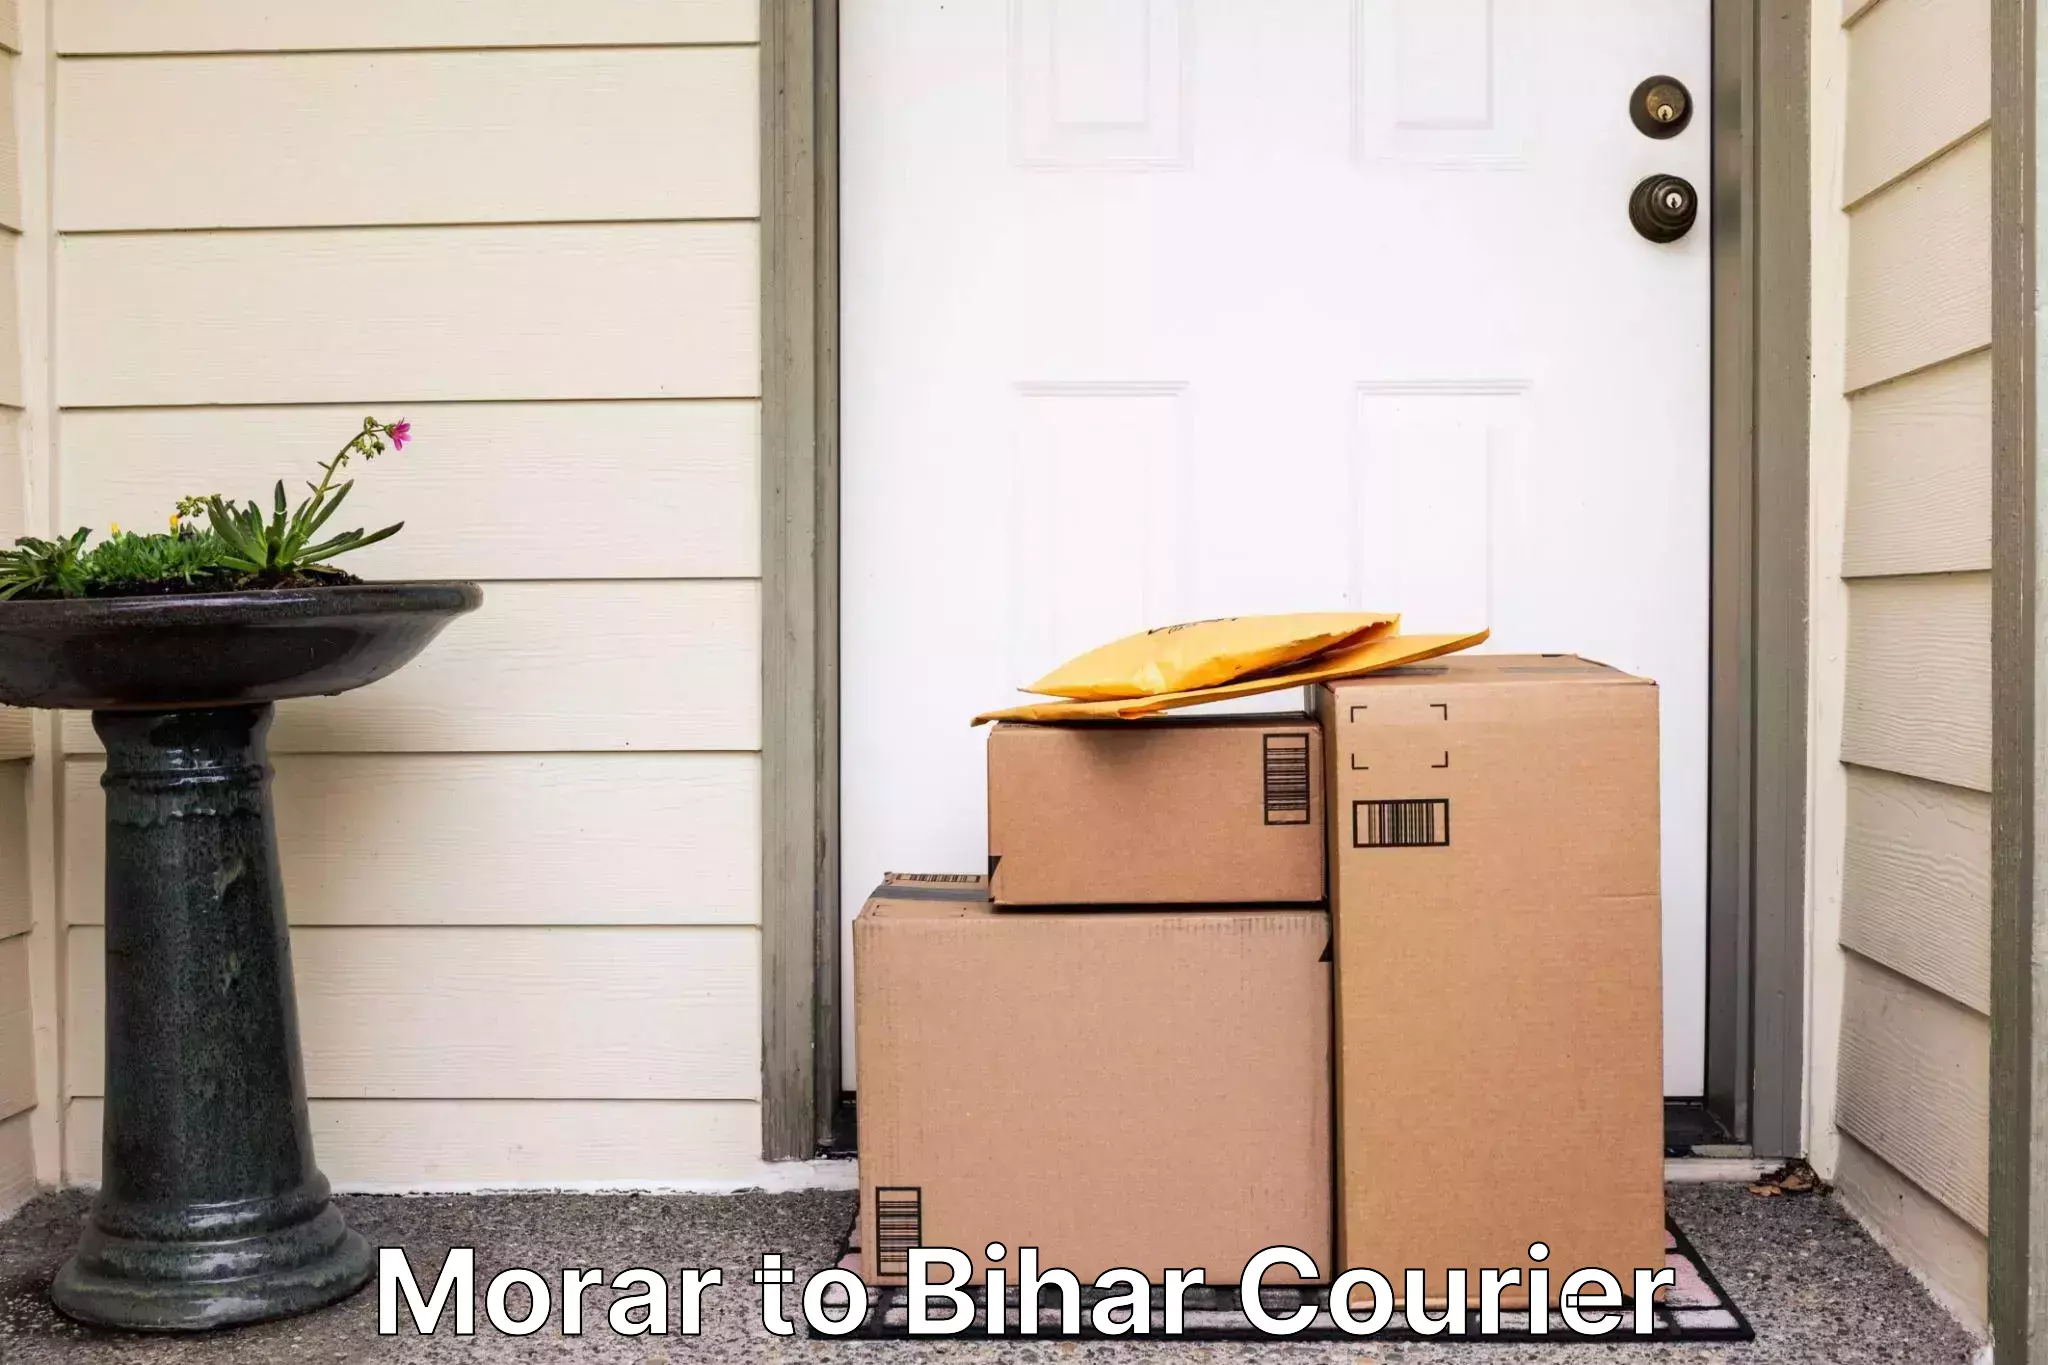 Full-service courier options Morar to Bihar